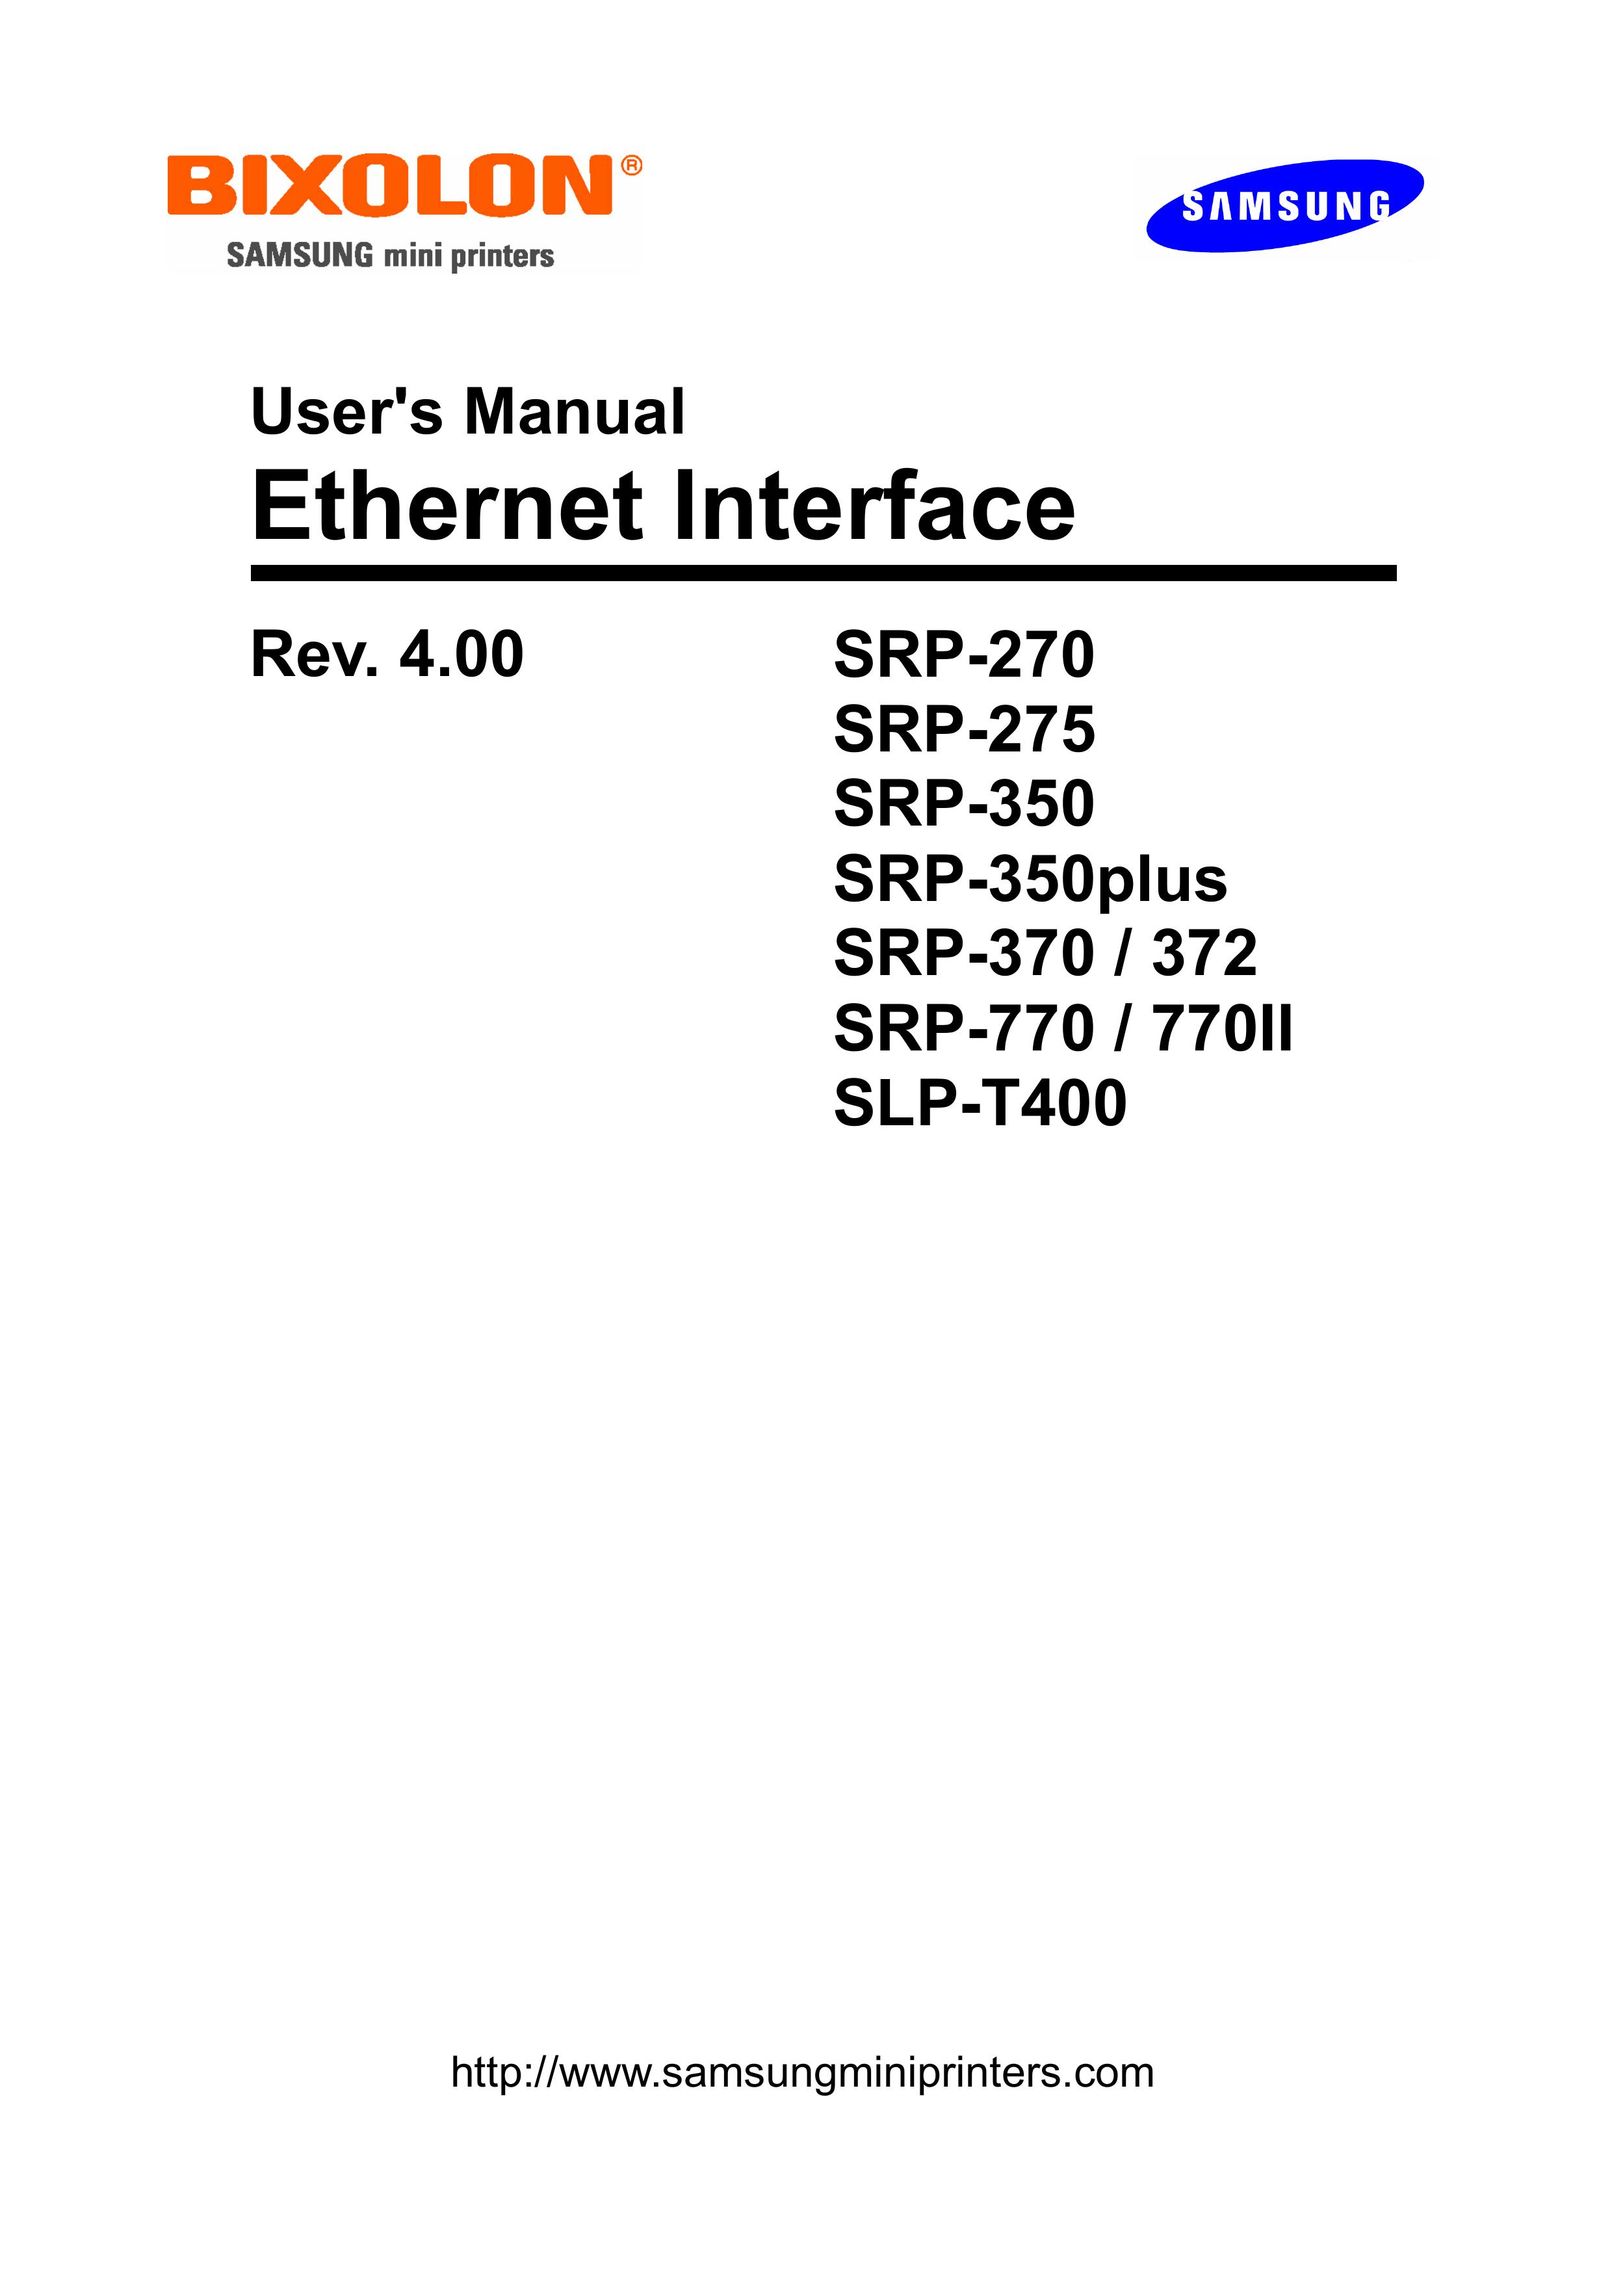 Samsung SRP-370 / 372 Network Card User Manual